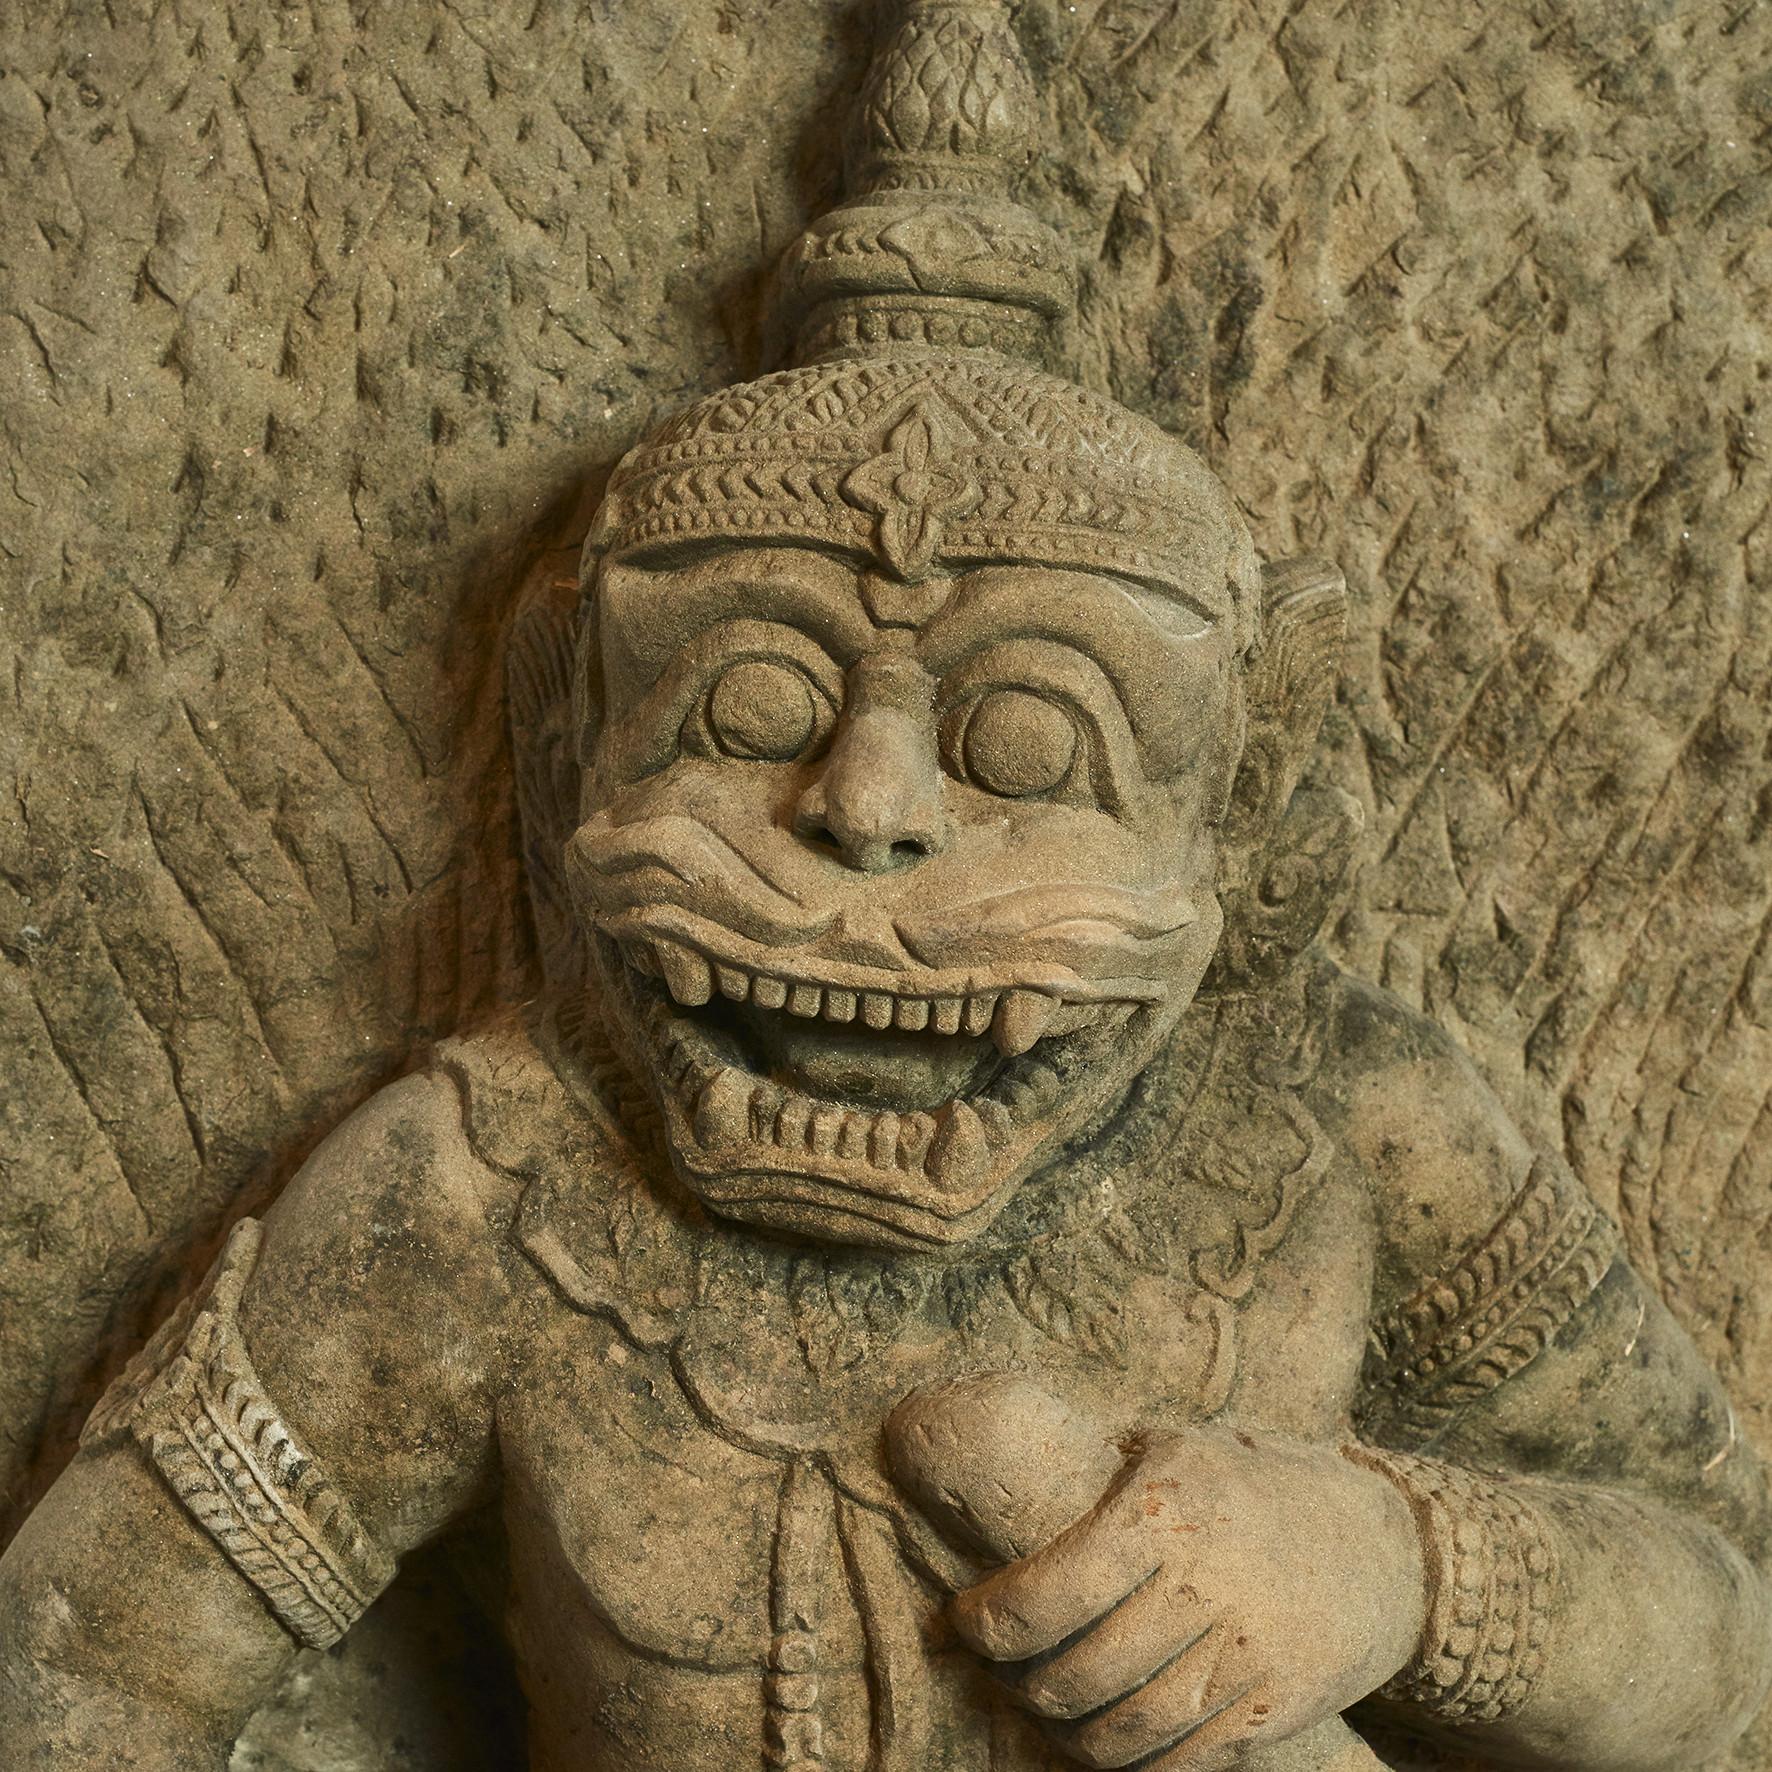 500-600 Year-Old Sandstone Sculpture of Hanuman, The Monkey God 1